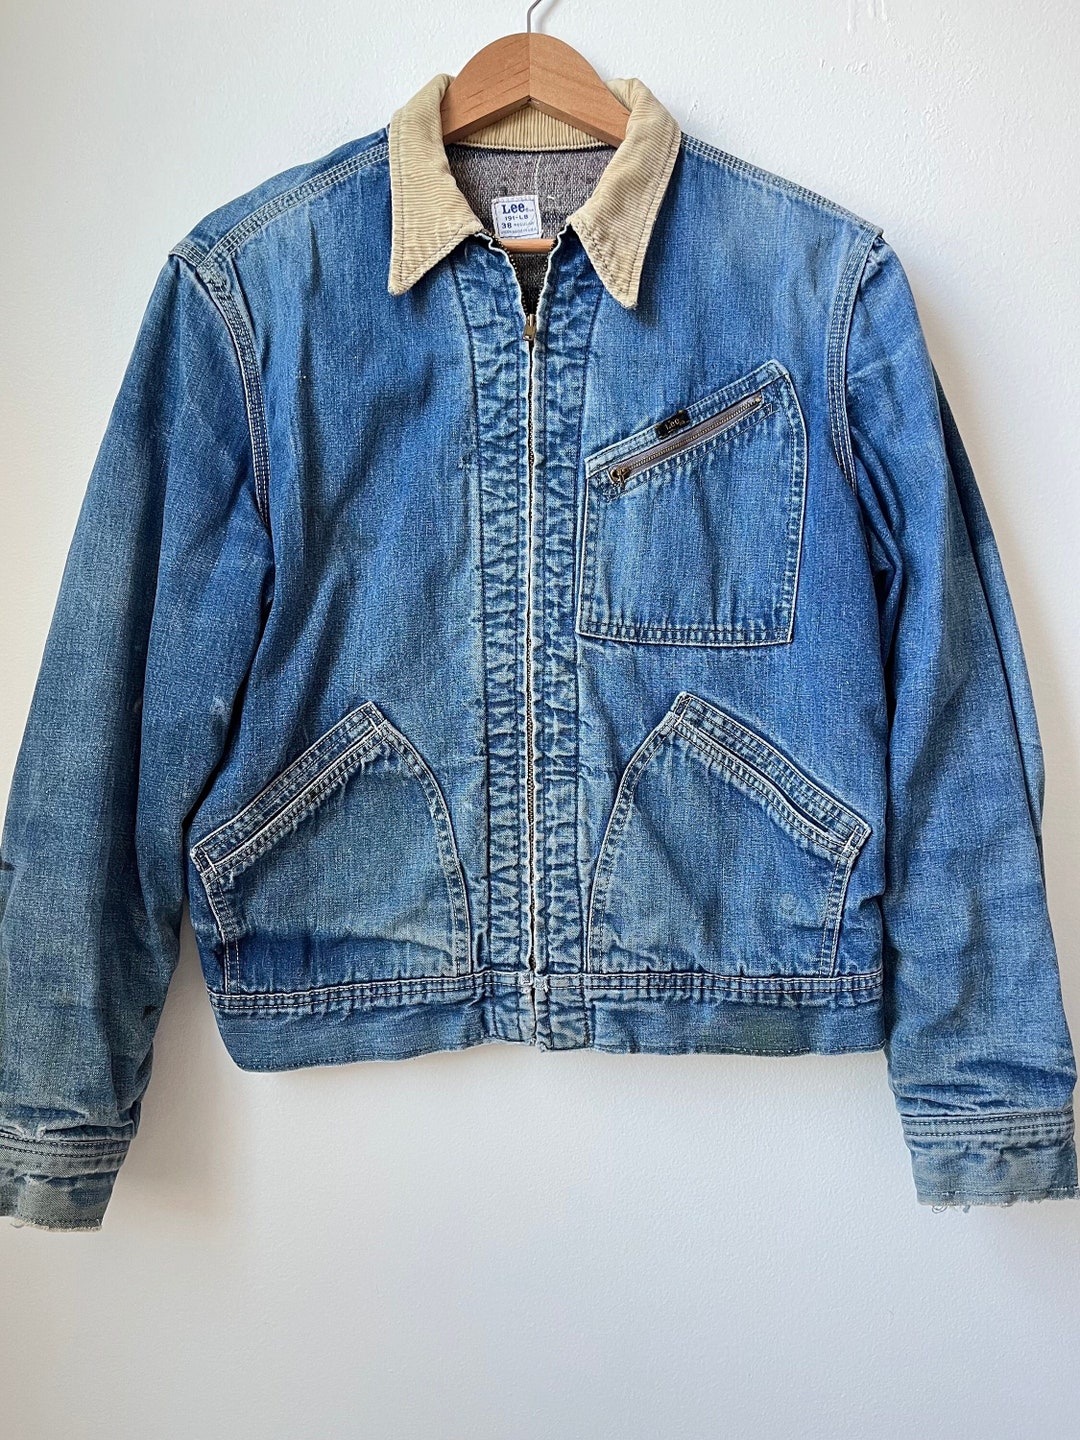 Coats & Clark Inc. N576 Denim Thread for Jeans, 250-Yard, Blue